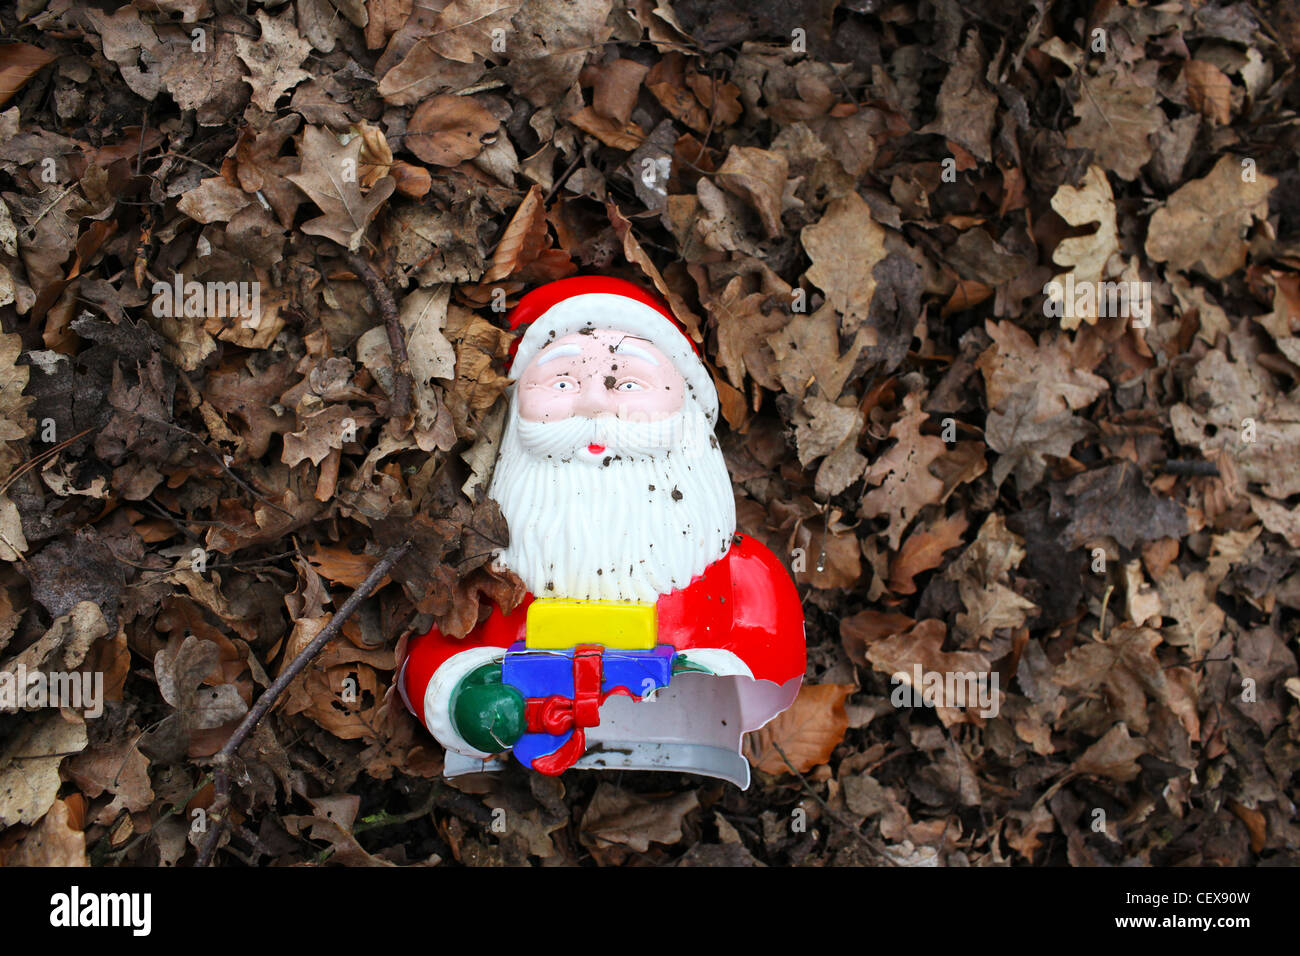 Broken Santa toy in fallen leaves Stock Photo